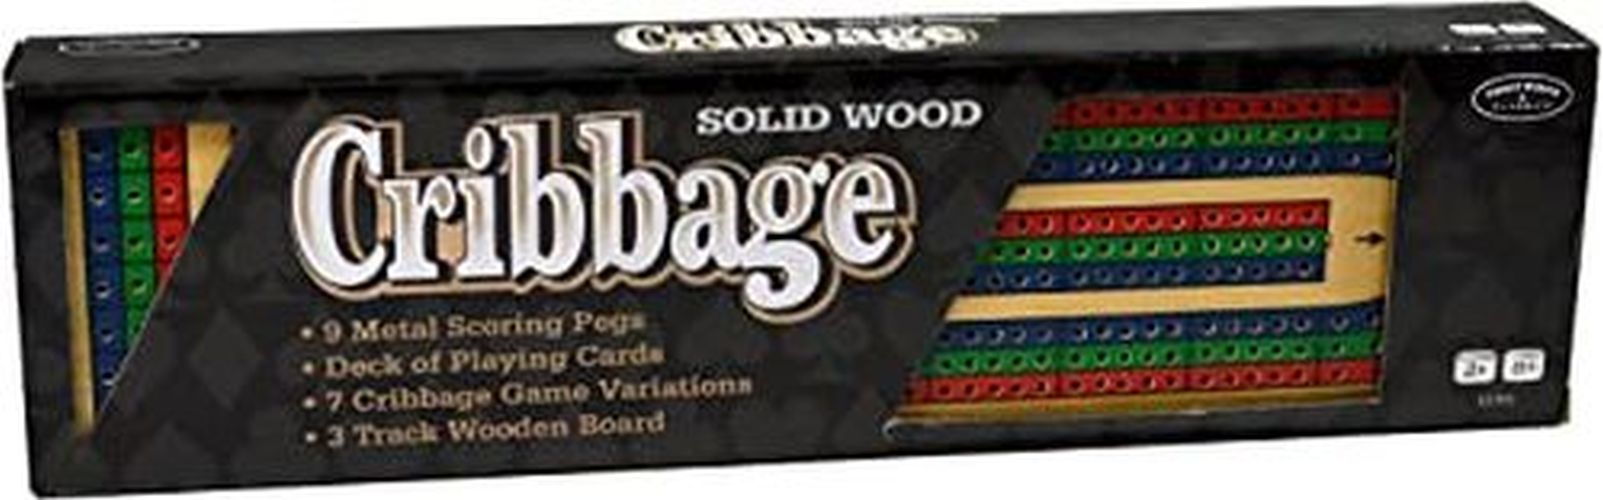 UNIVERSITY GAMES Cribbage Solid Wood Game - BOARD GAMES